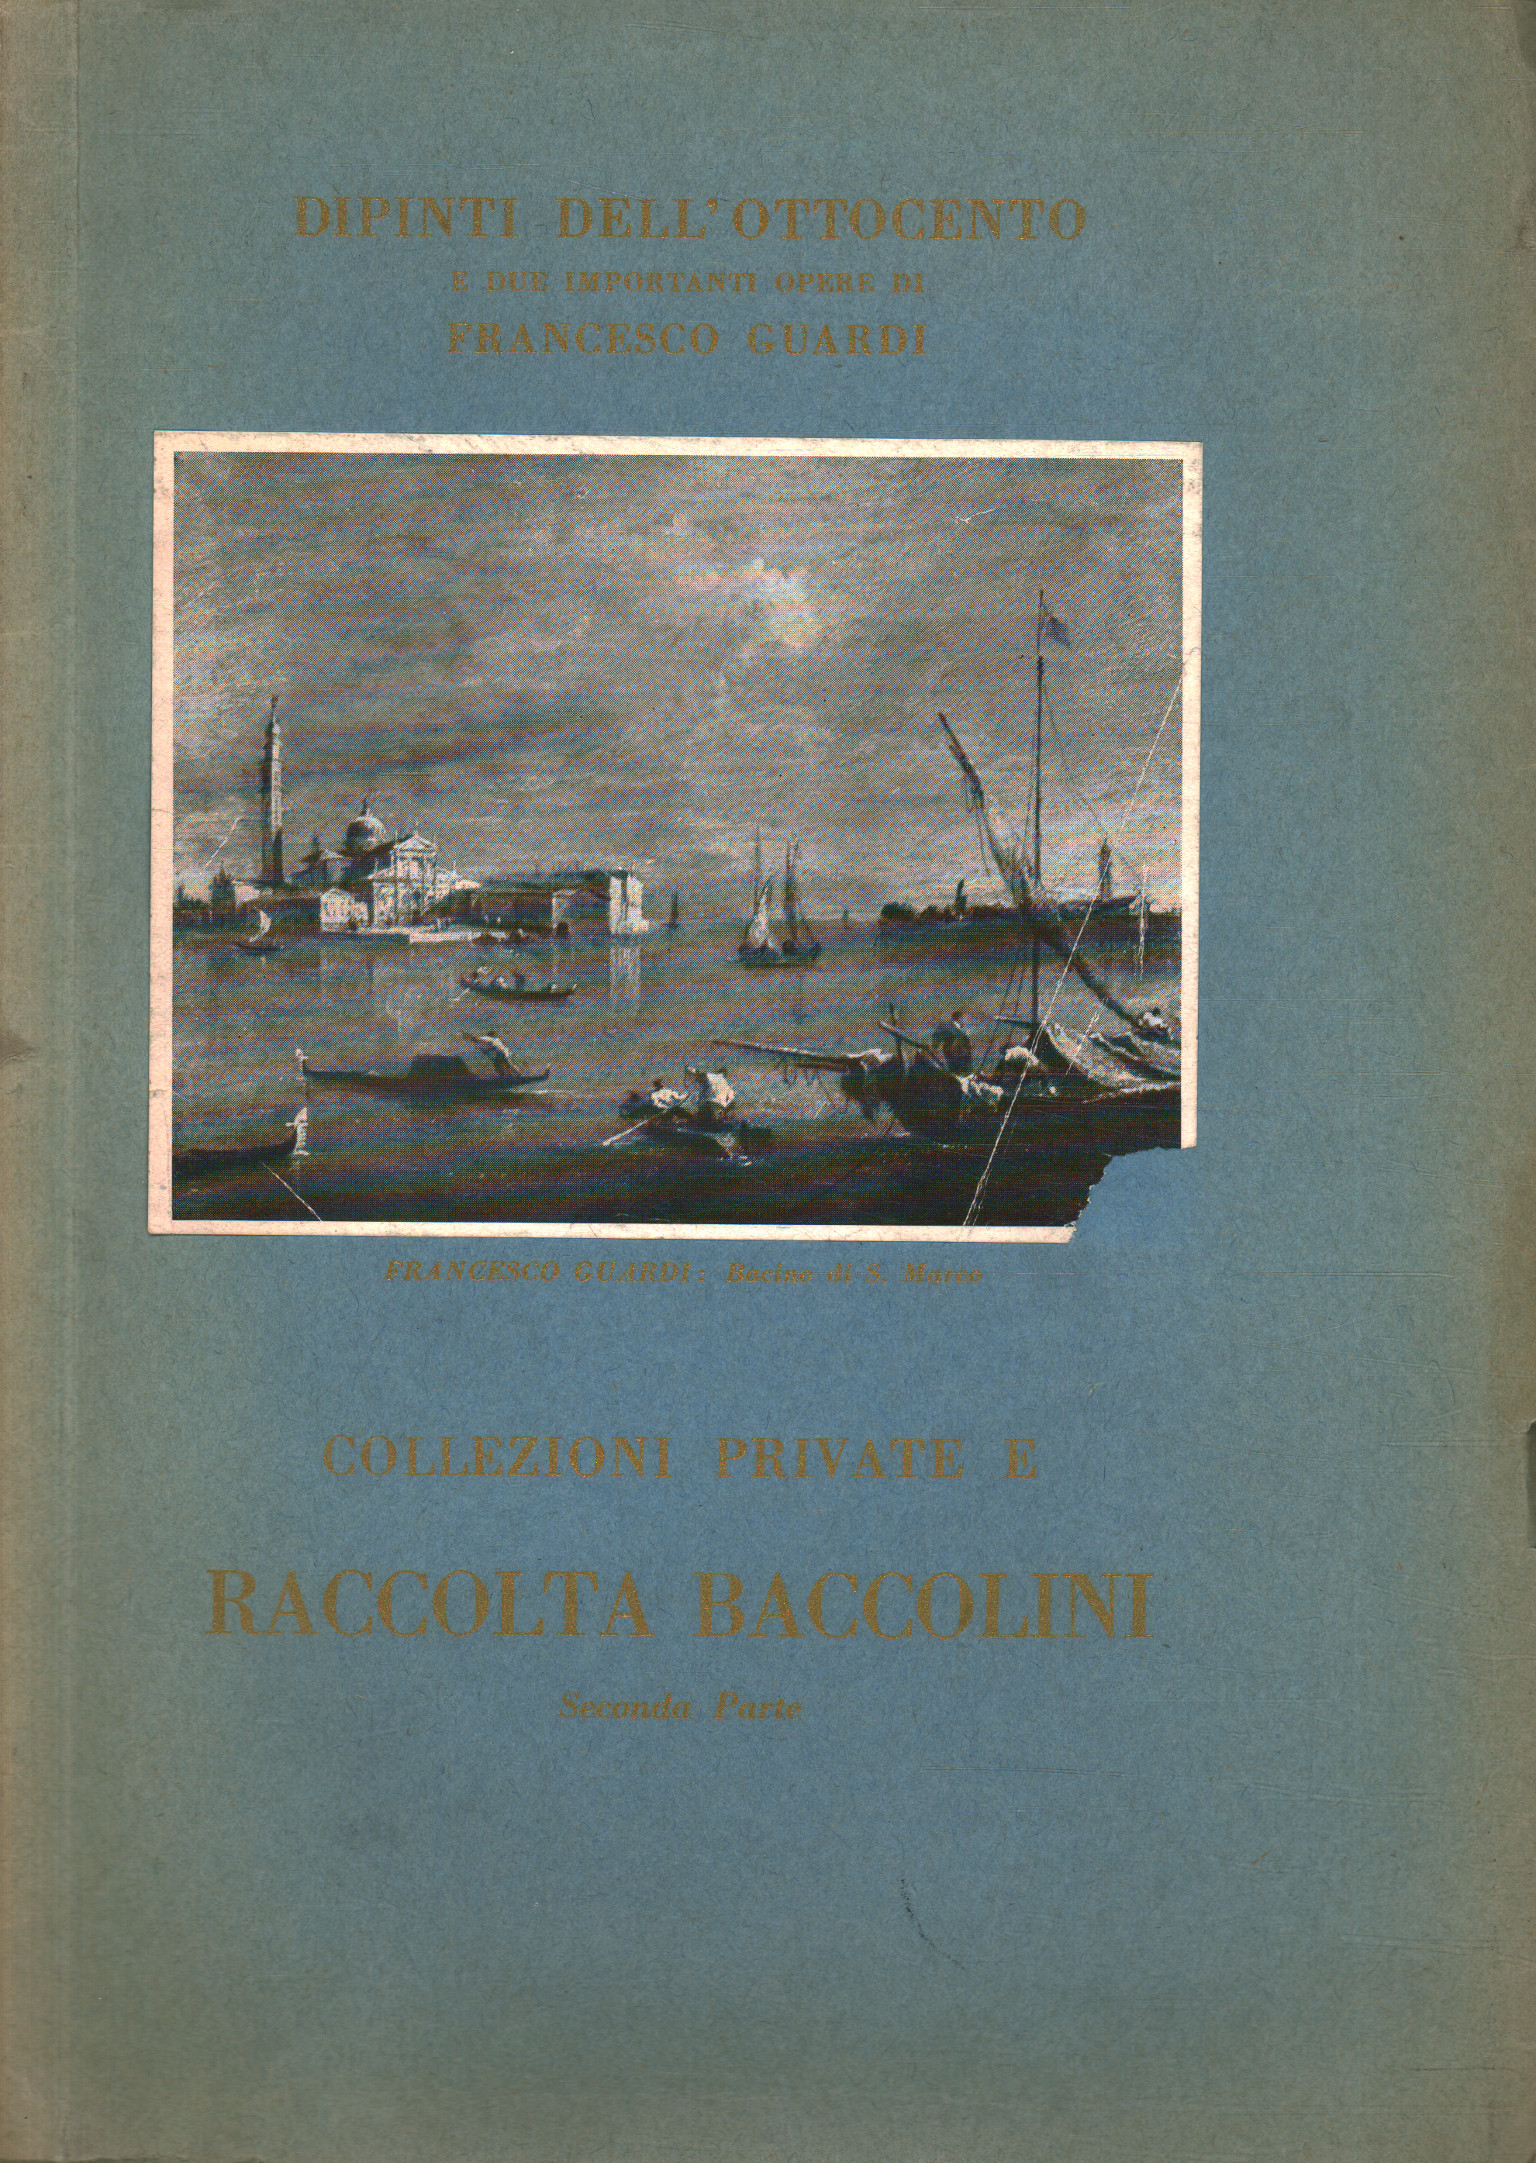 Collections privées et collection Baccolini